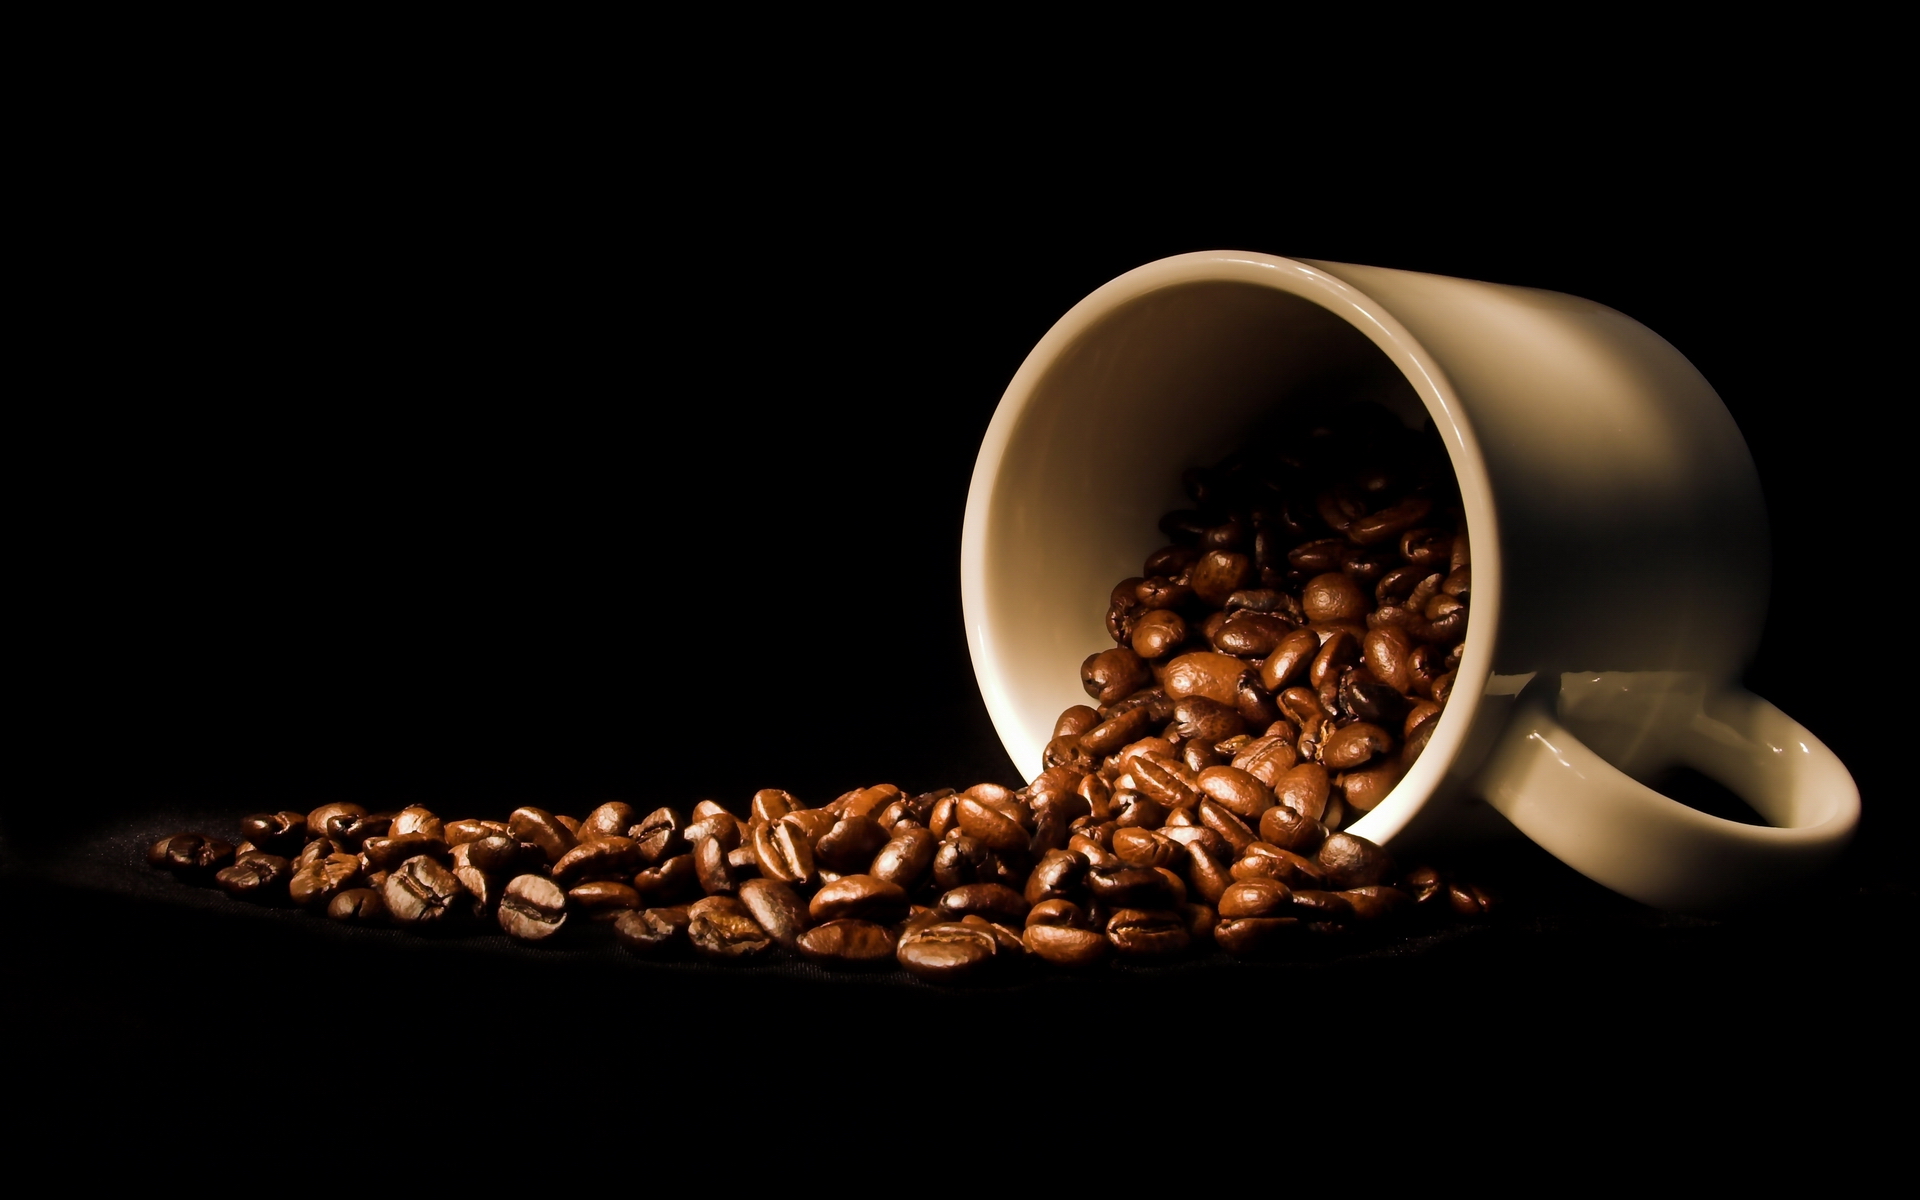 белая чашка перевернутая, рассыпанное кофе в зернах, черный фон, минимализм,  White cup inverted, sprinkled with coffee beans, black background, minimalism